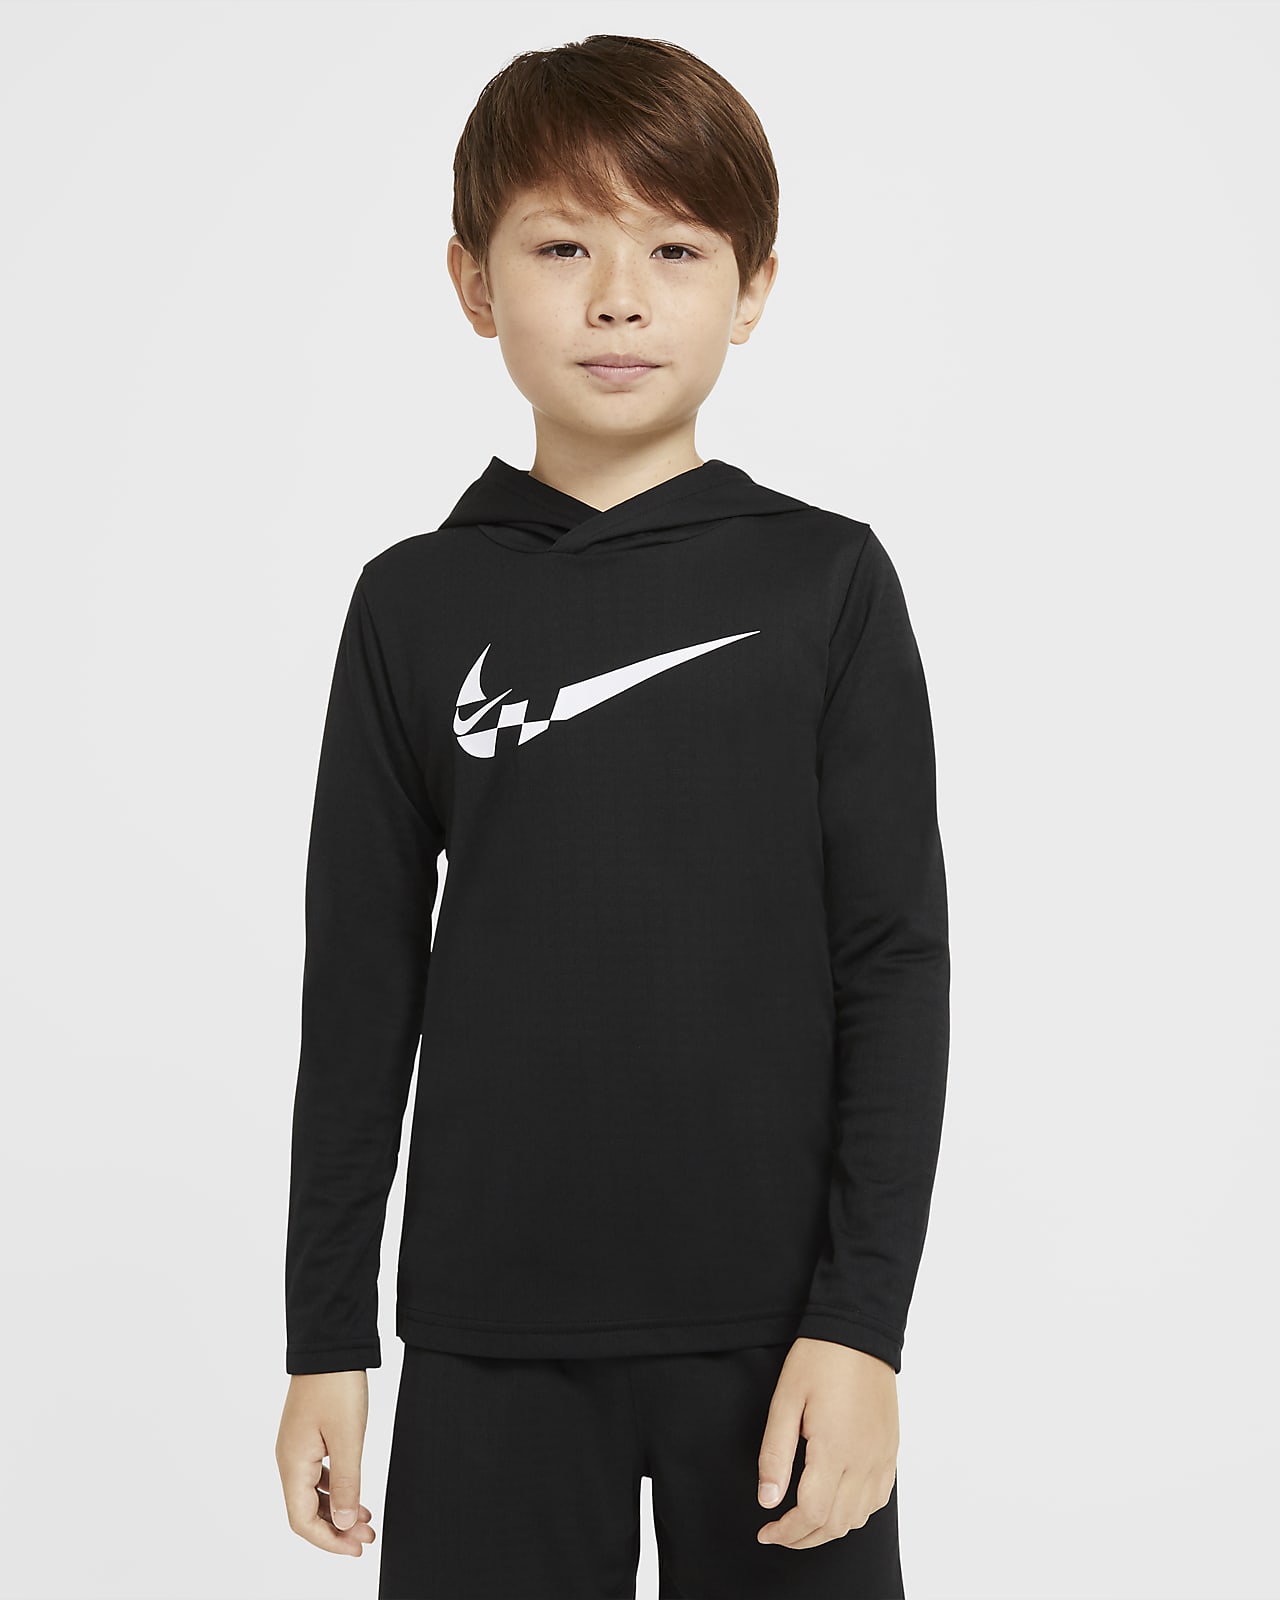 Nike Big Kids' (Boys') Long-Sleeve Hooded Training Top